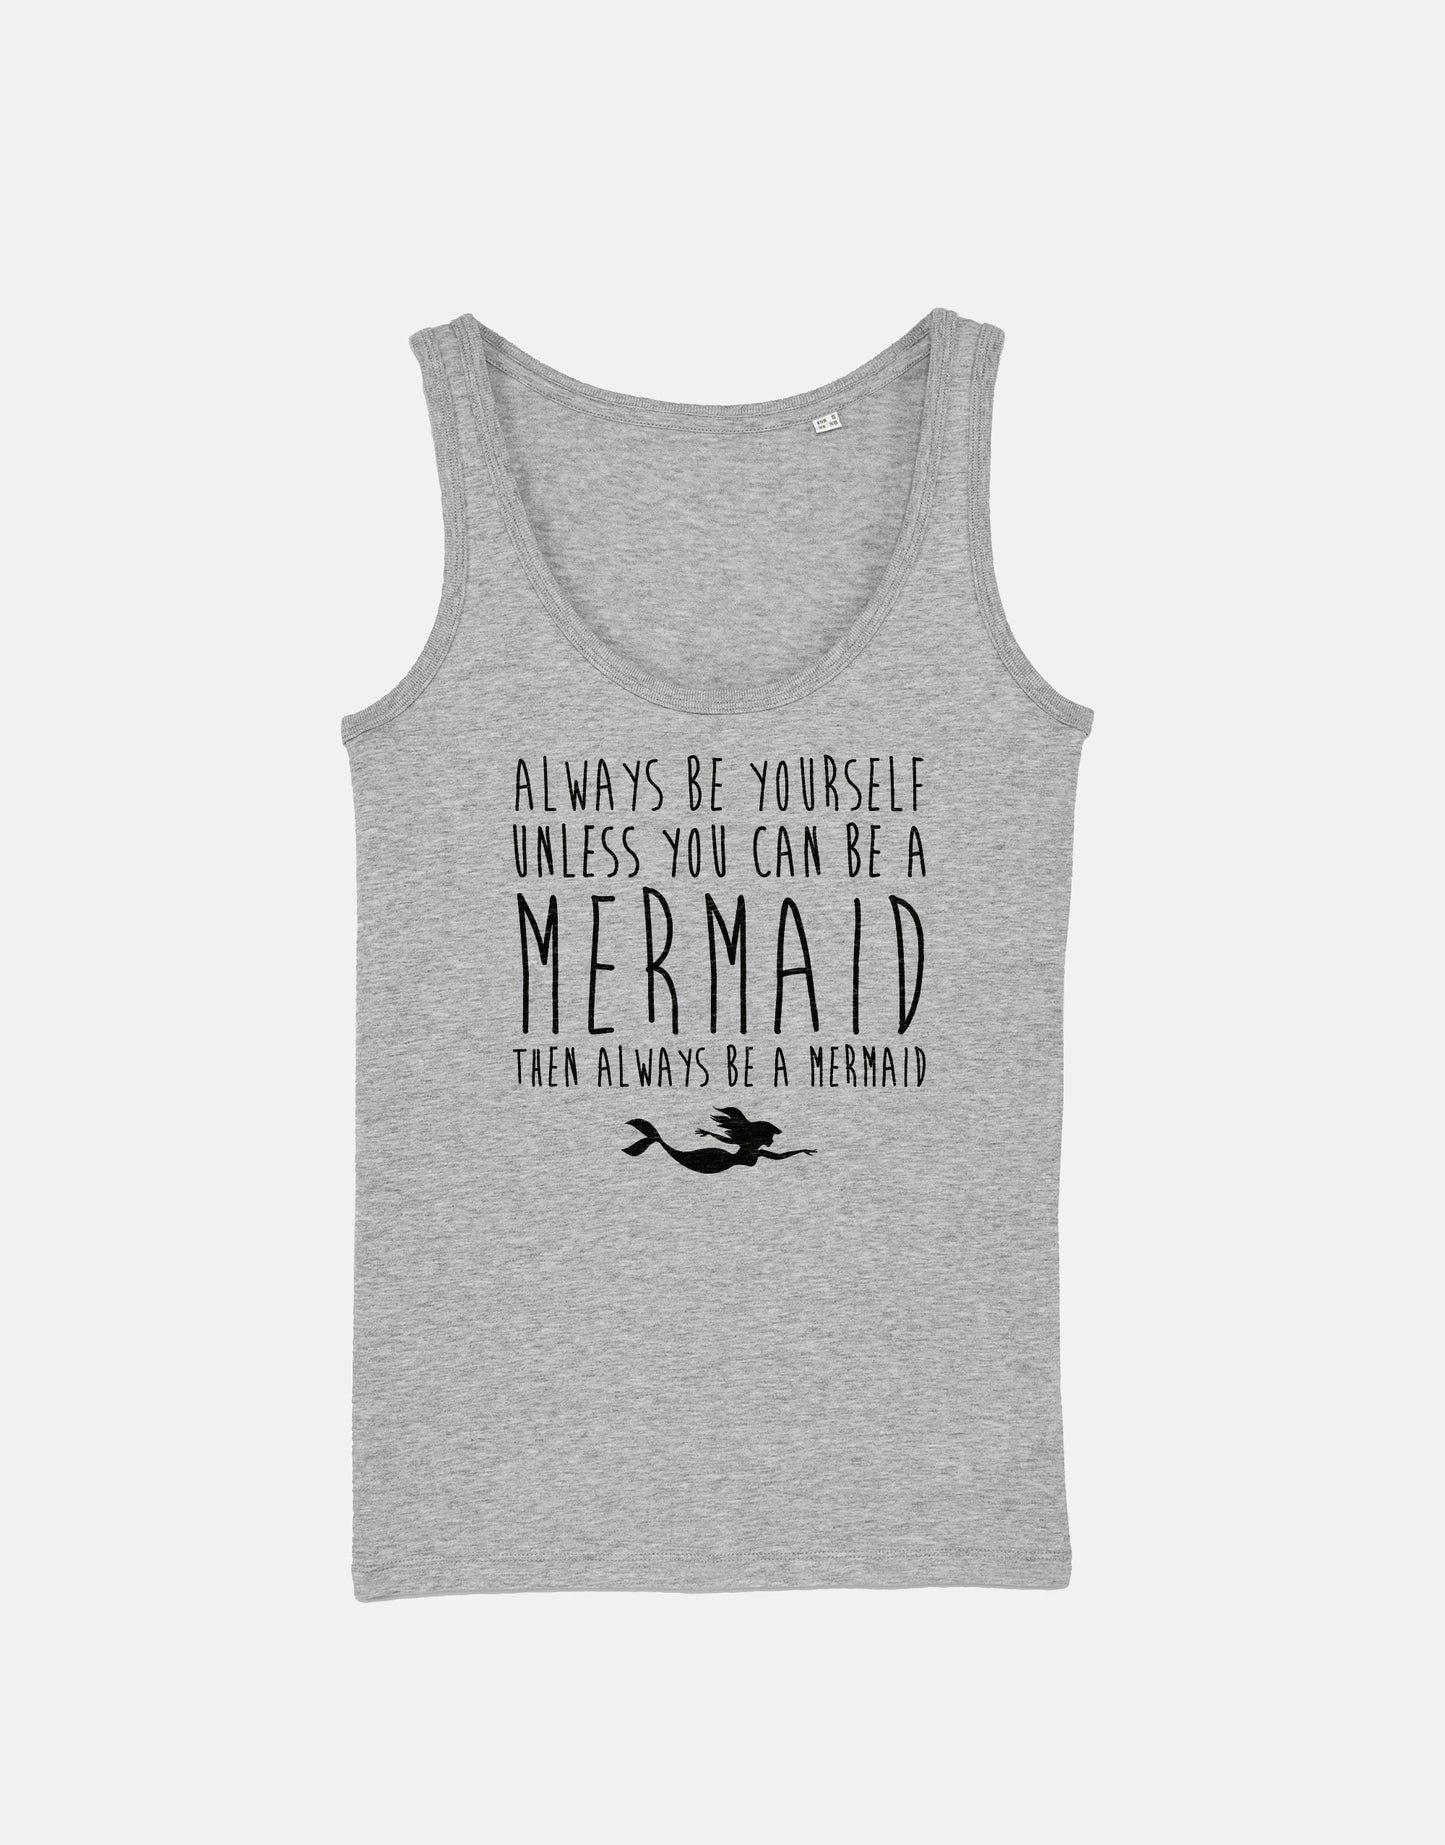 Mermaid Tank Top - Nautical Tank Top - Always Be Yourself Unless You Can Be A Mermaid Tank - Womens Mermaid Vest Top